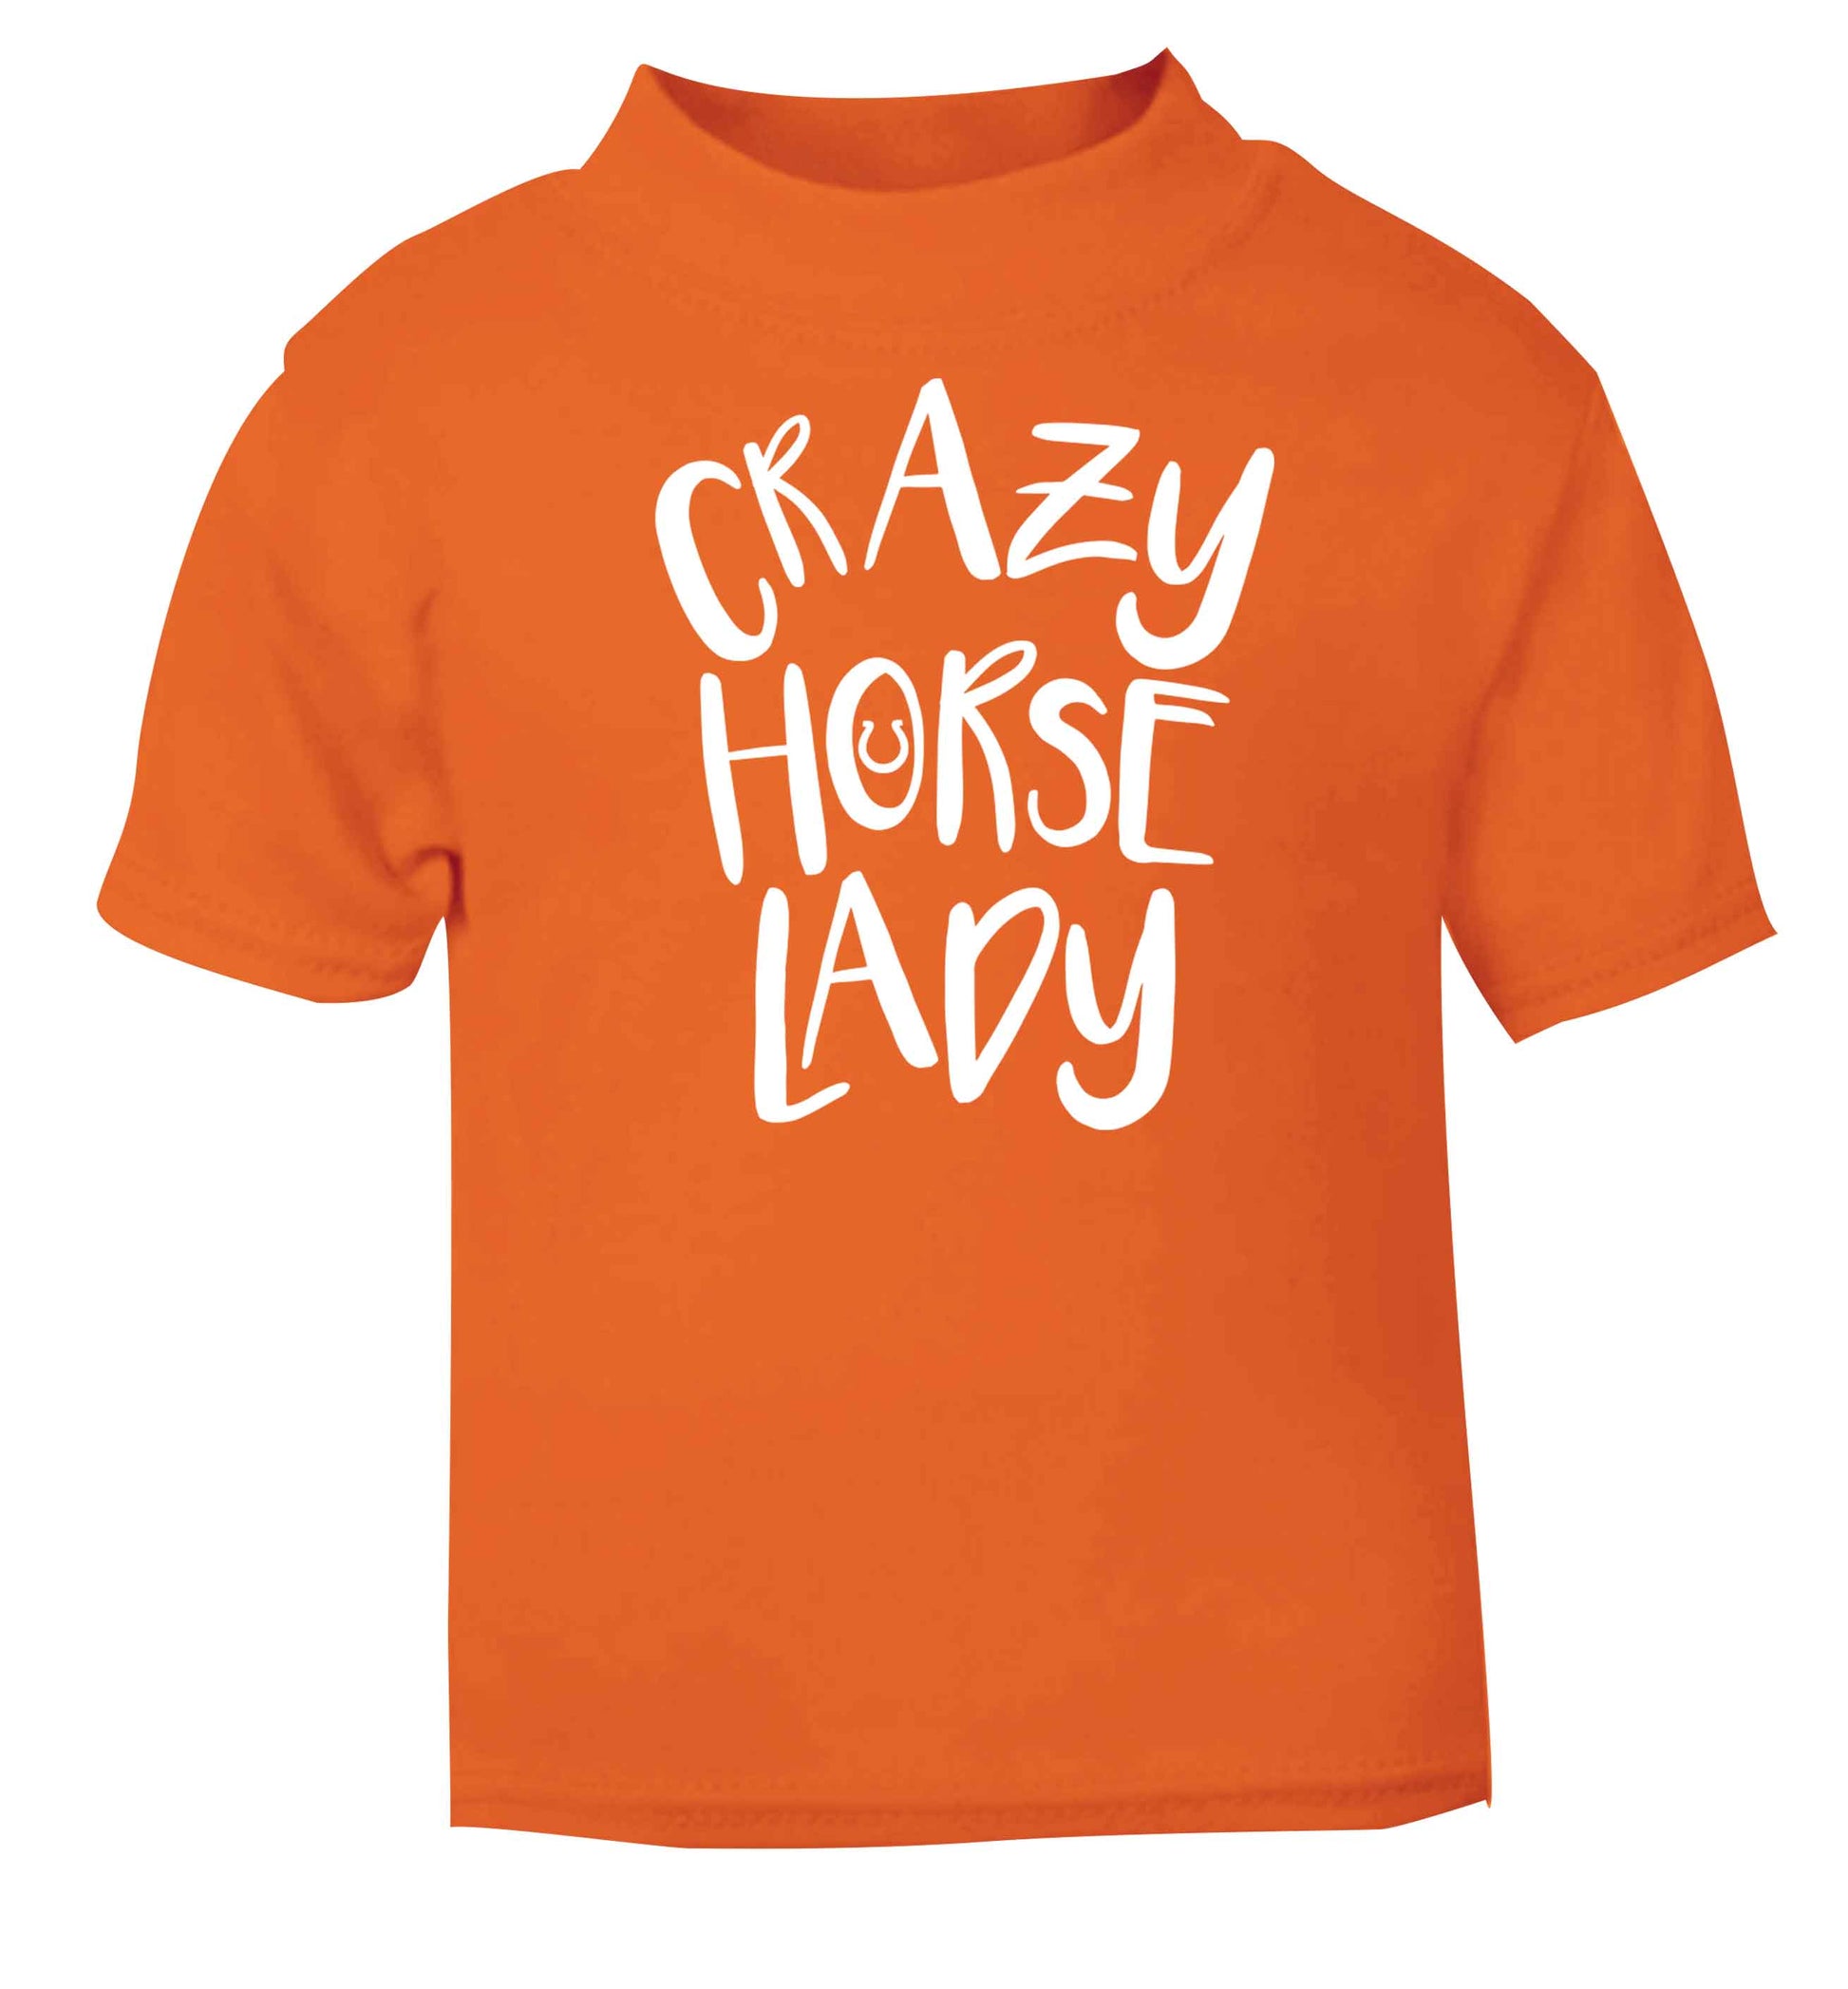 Crazy horse lady orange baby toddler Tshirt 2 Years